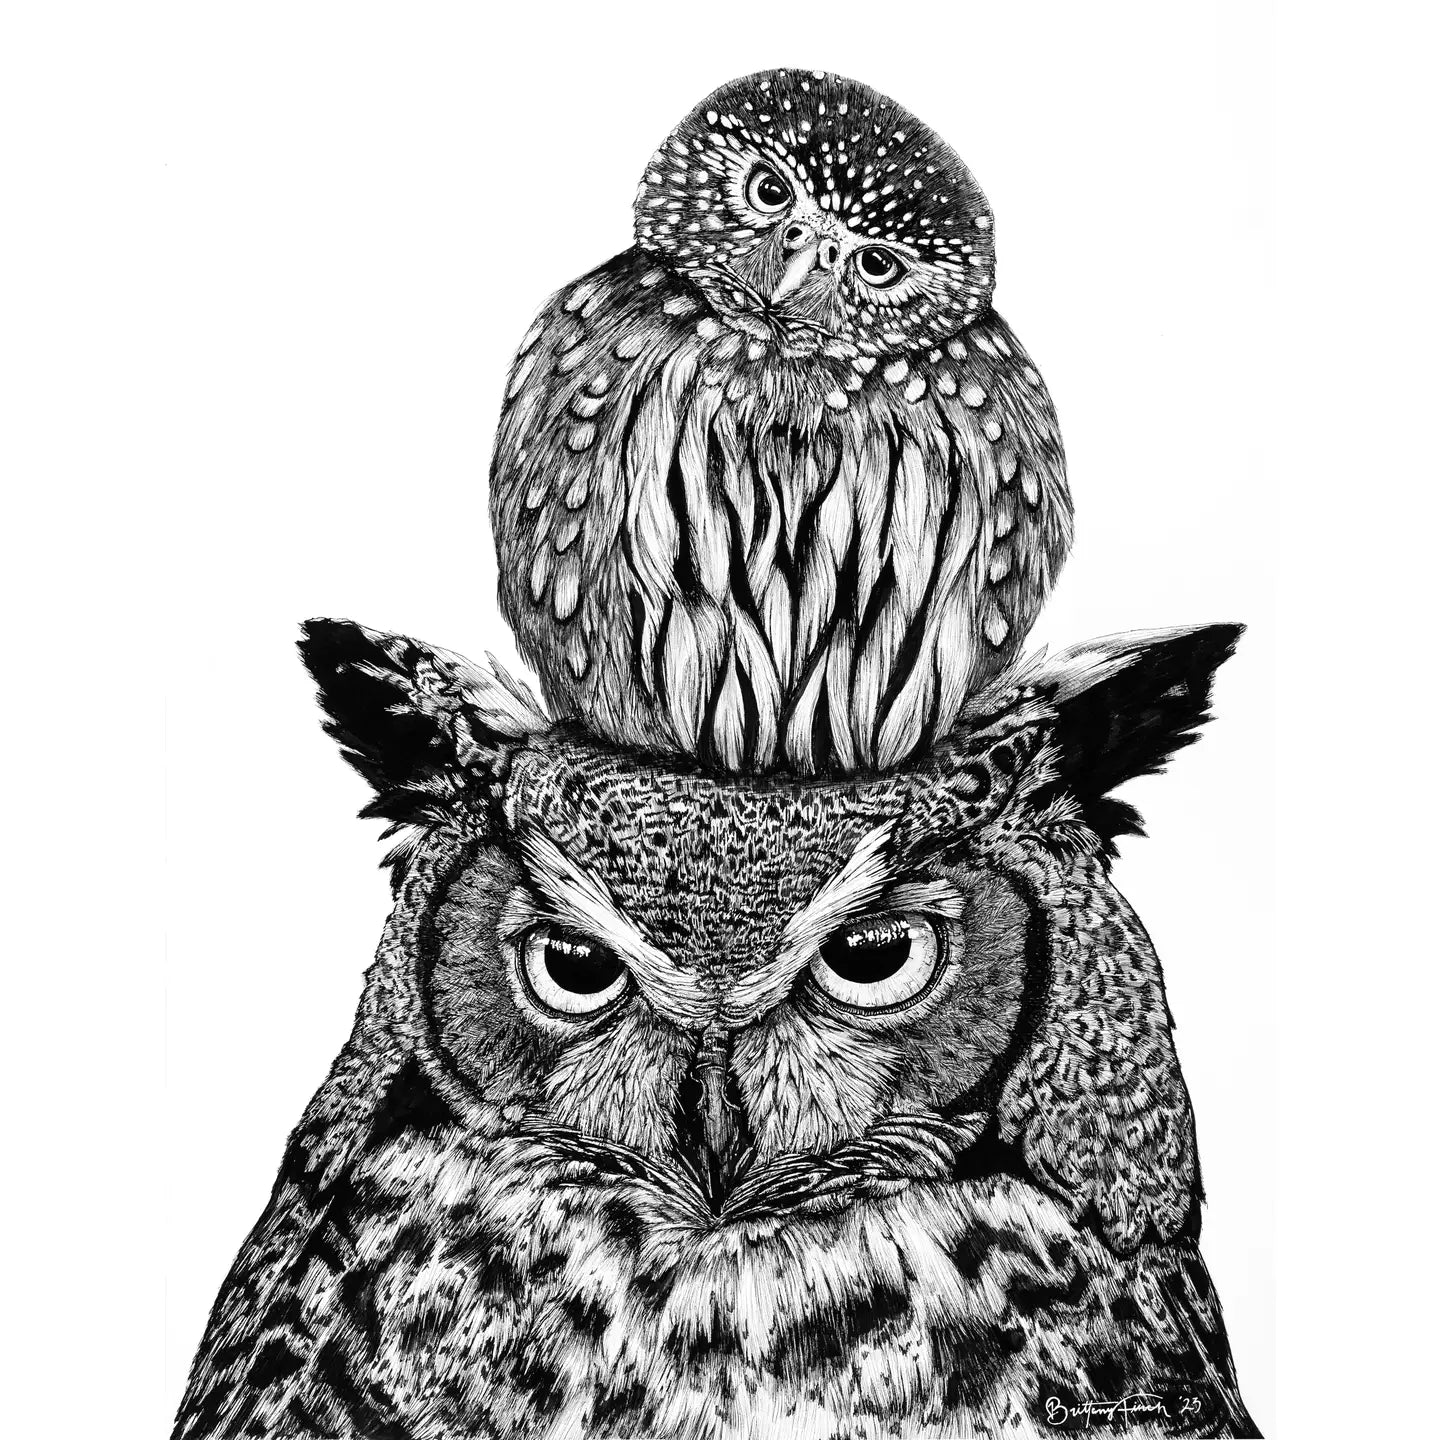 Owls Card